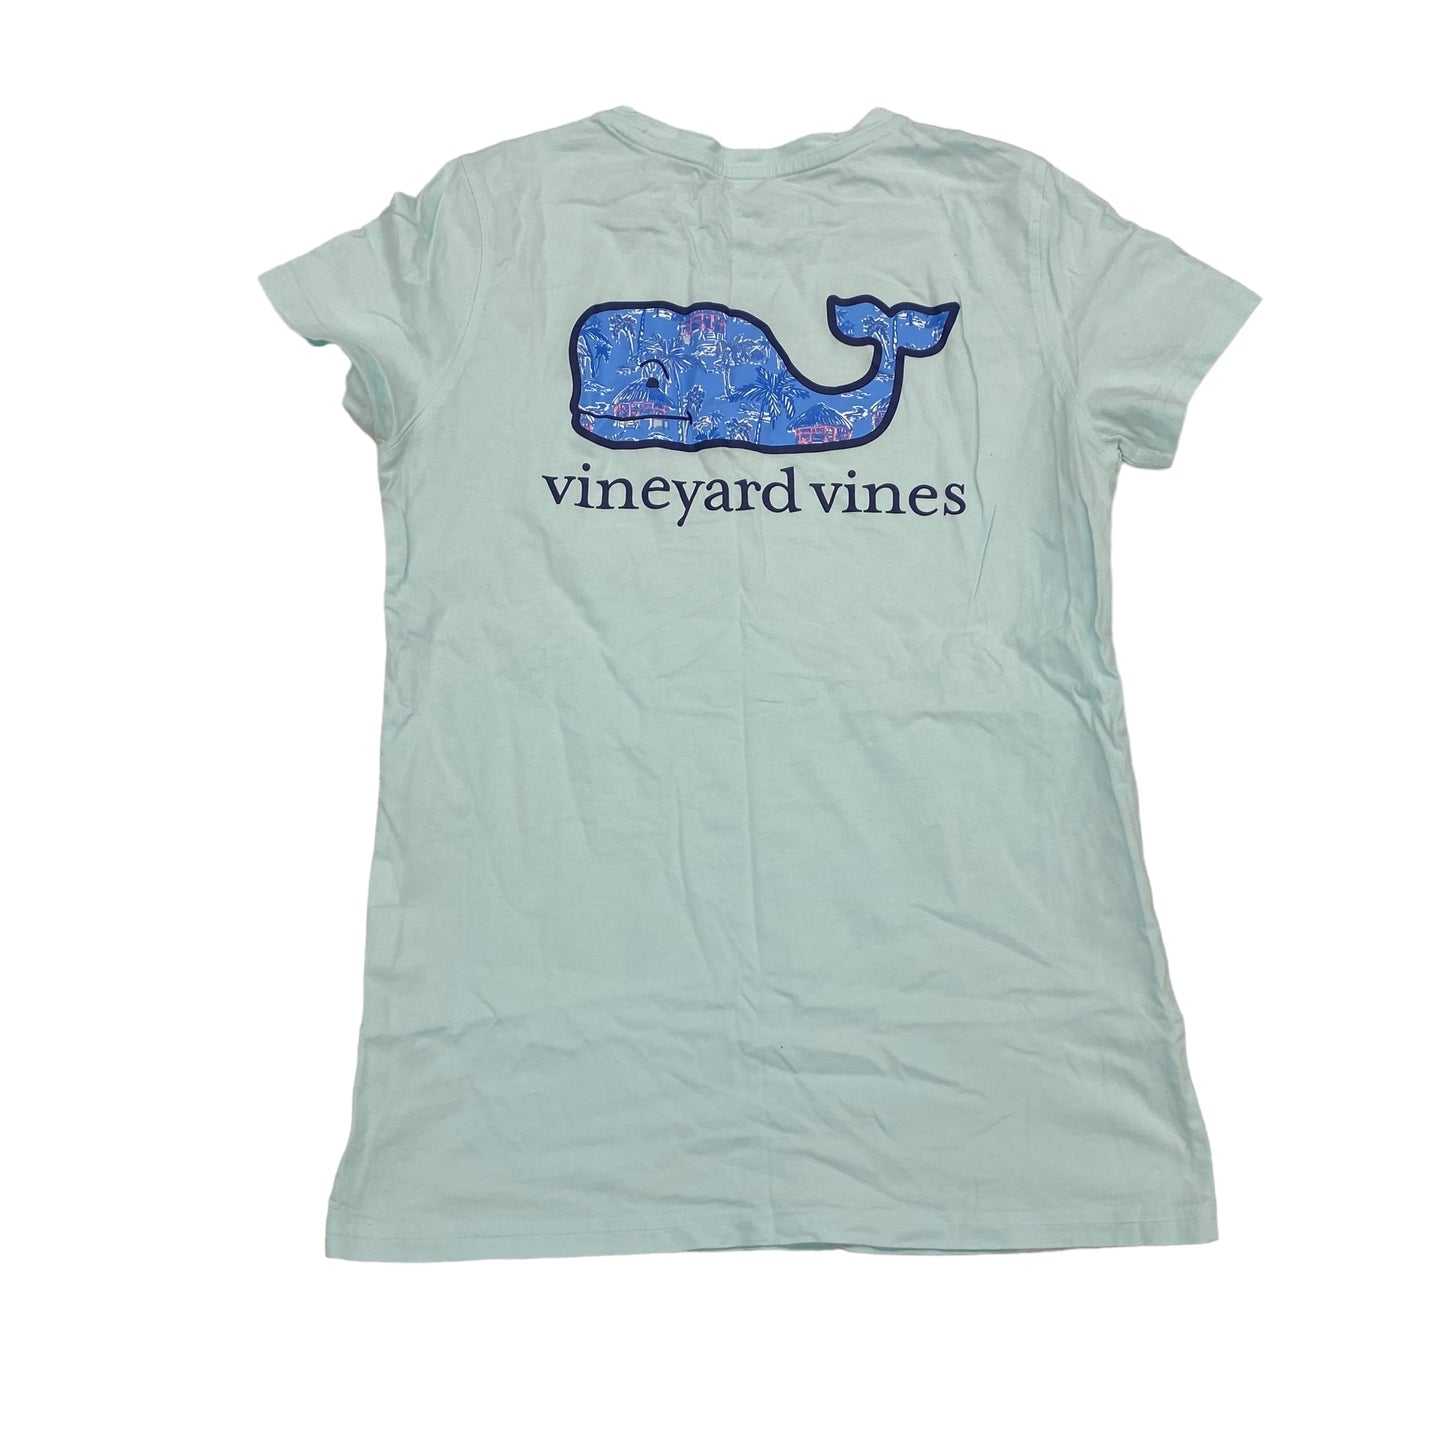 Blue Top Short Sleeve Vineyard Vines, Size Xs